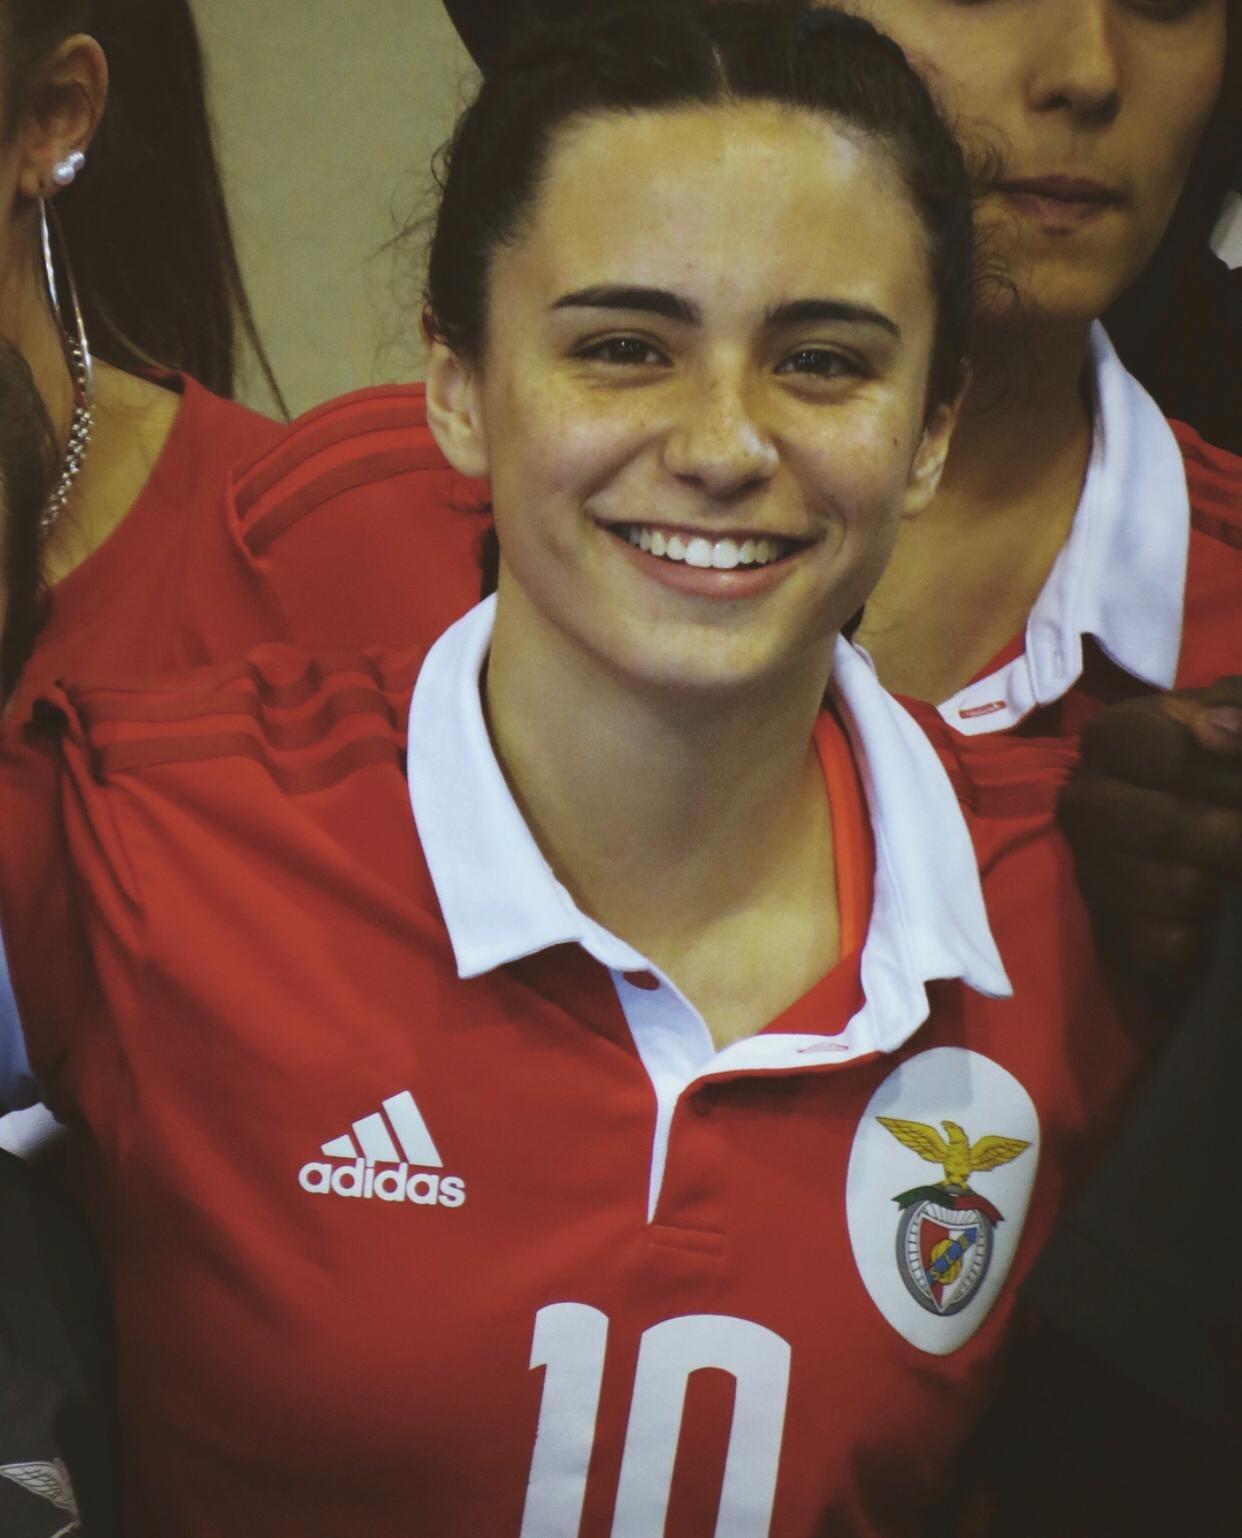 Beatriz Marques: Aspirante a Jornalista de dia, Jogadora de Voleibol no Benfica à noite